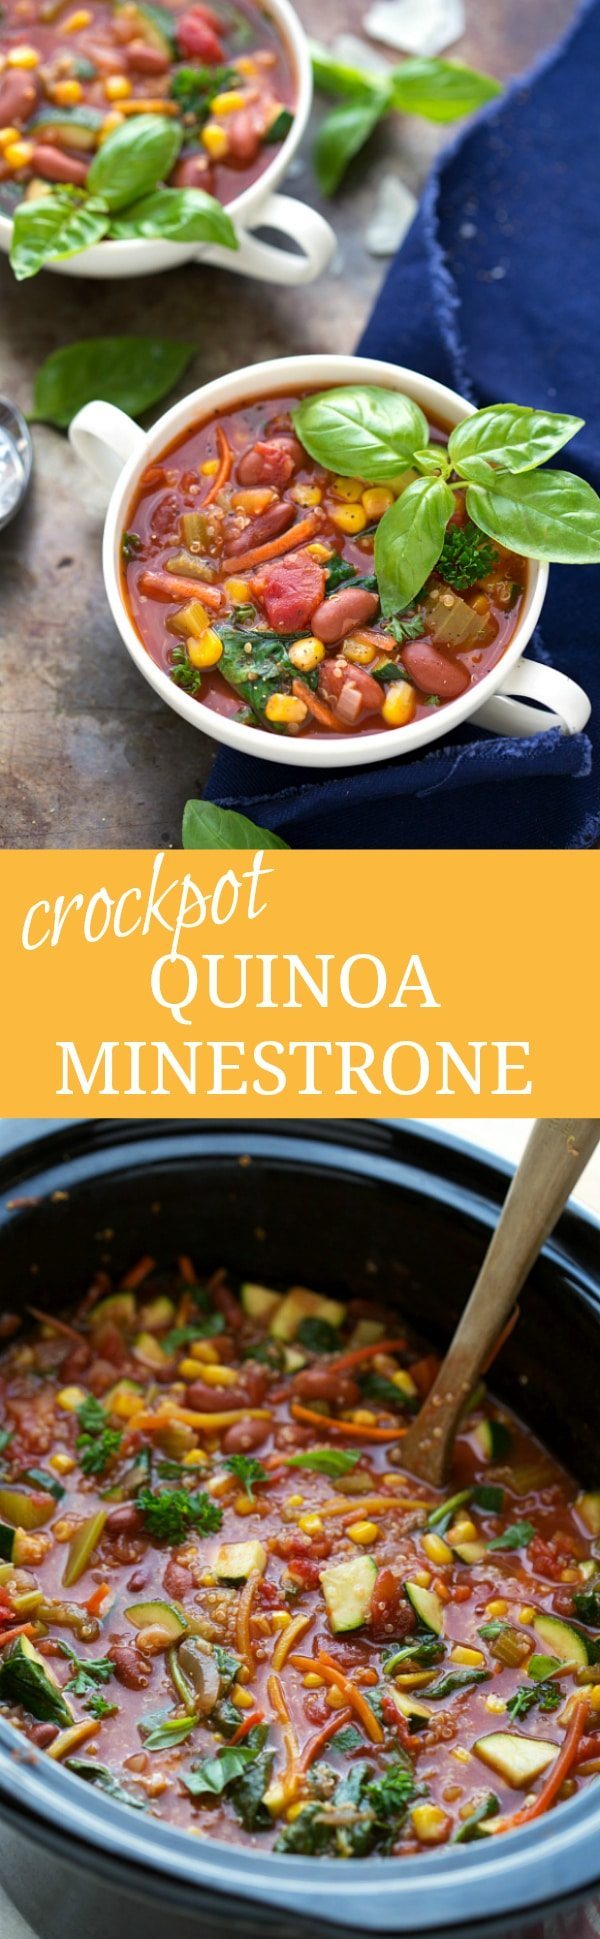 Easy Crockpot Quinoa Minestrone